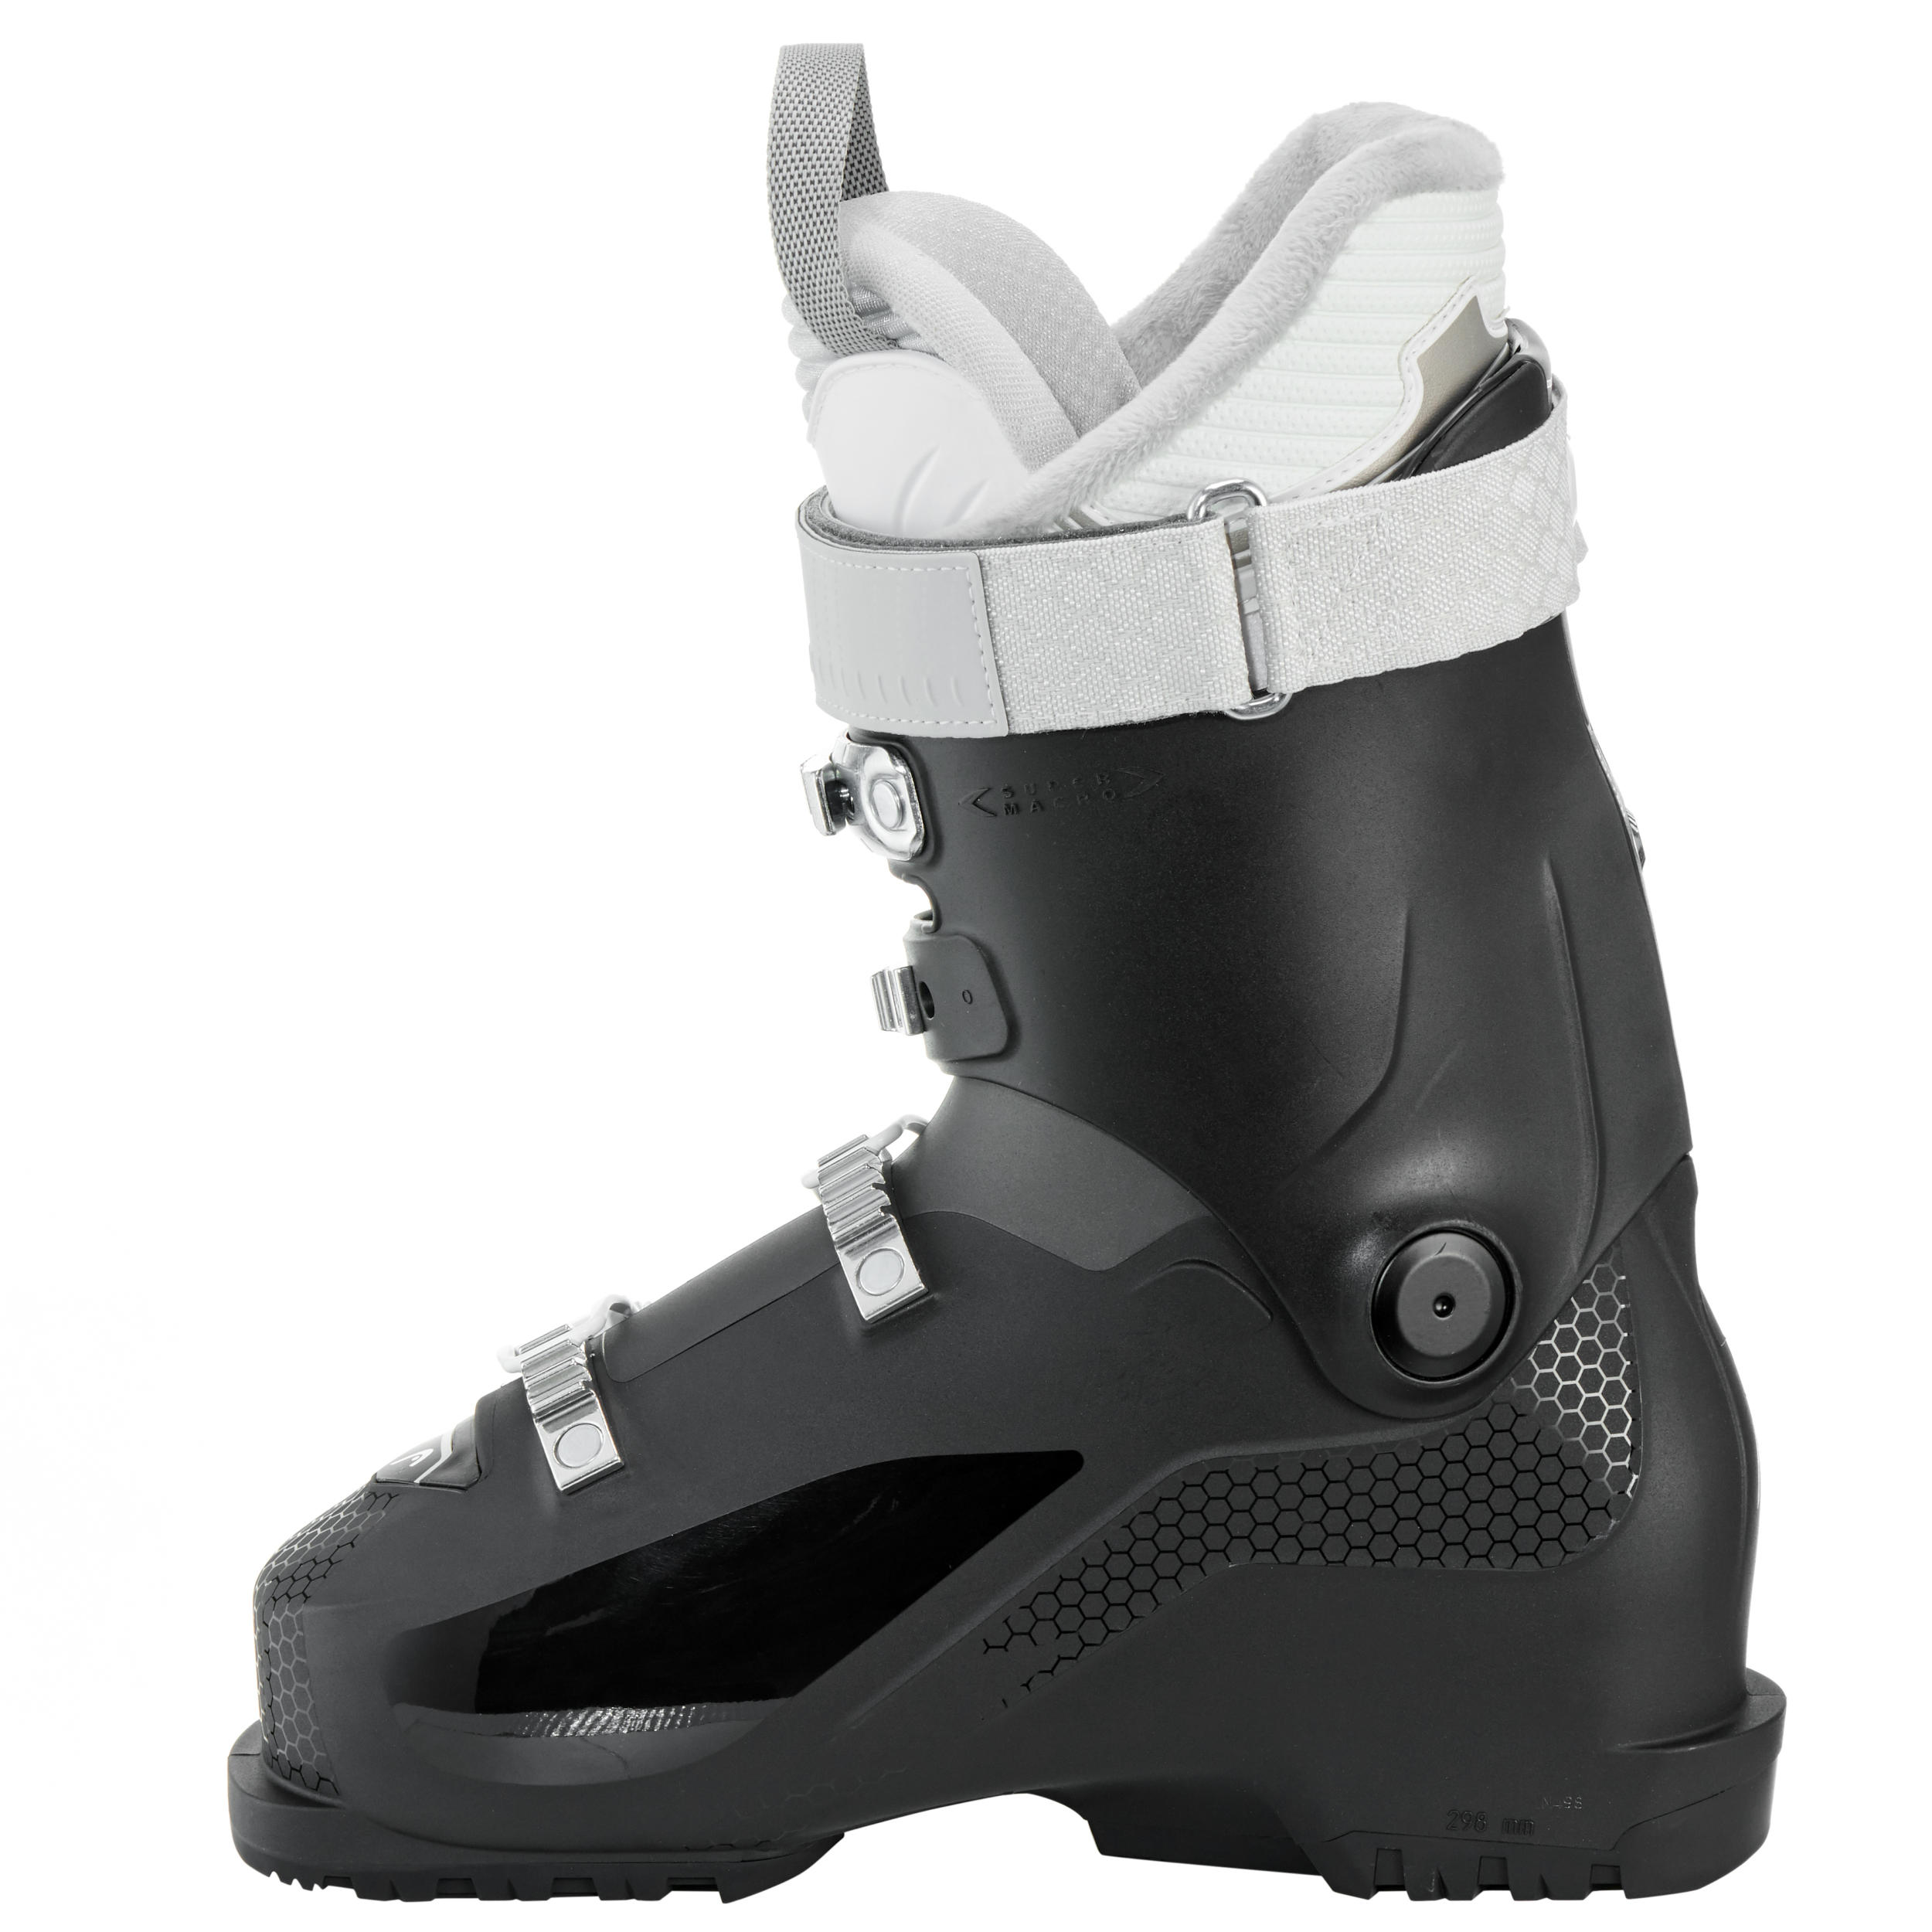 Women's Downhill Ski Boots - Black 4/10